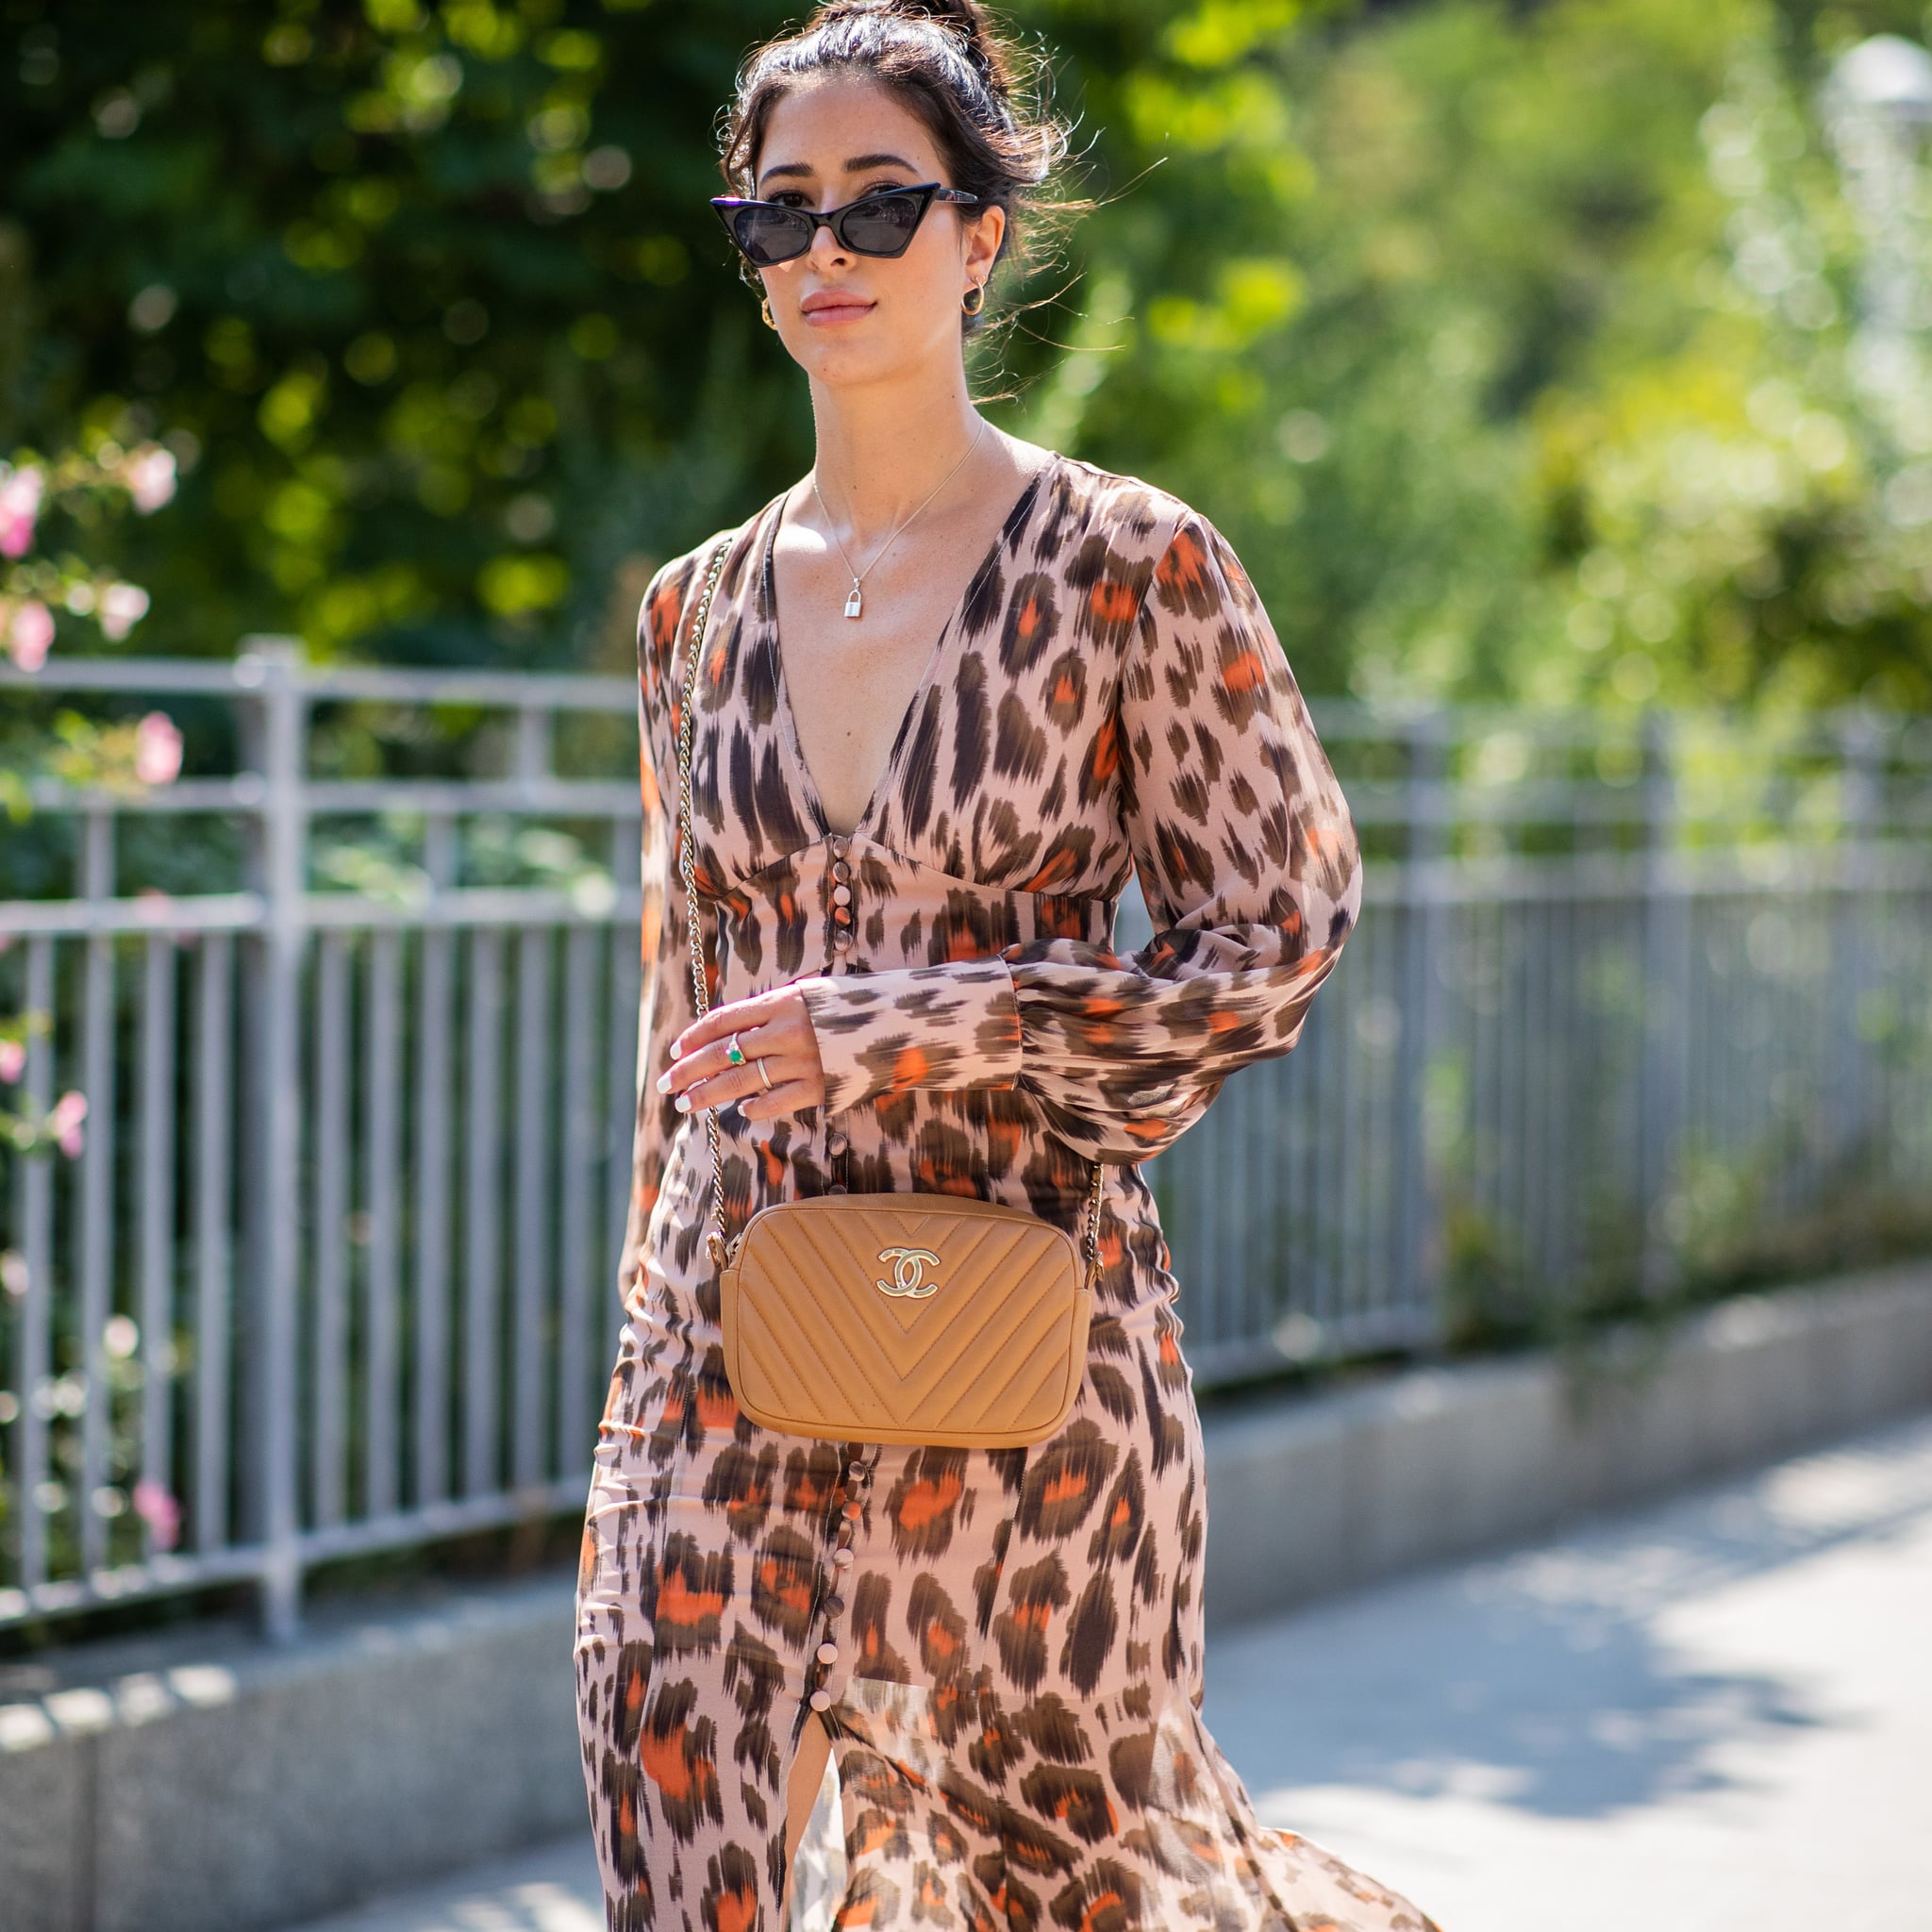 cheetah print dress outfit